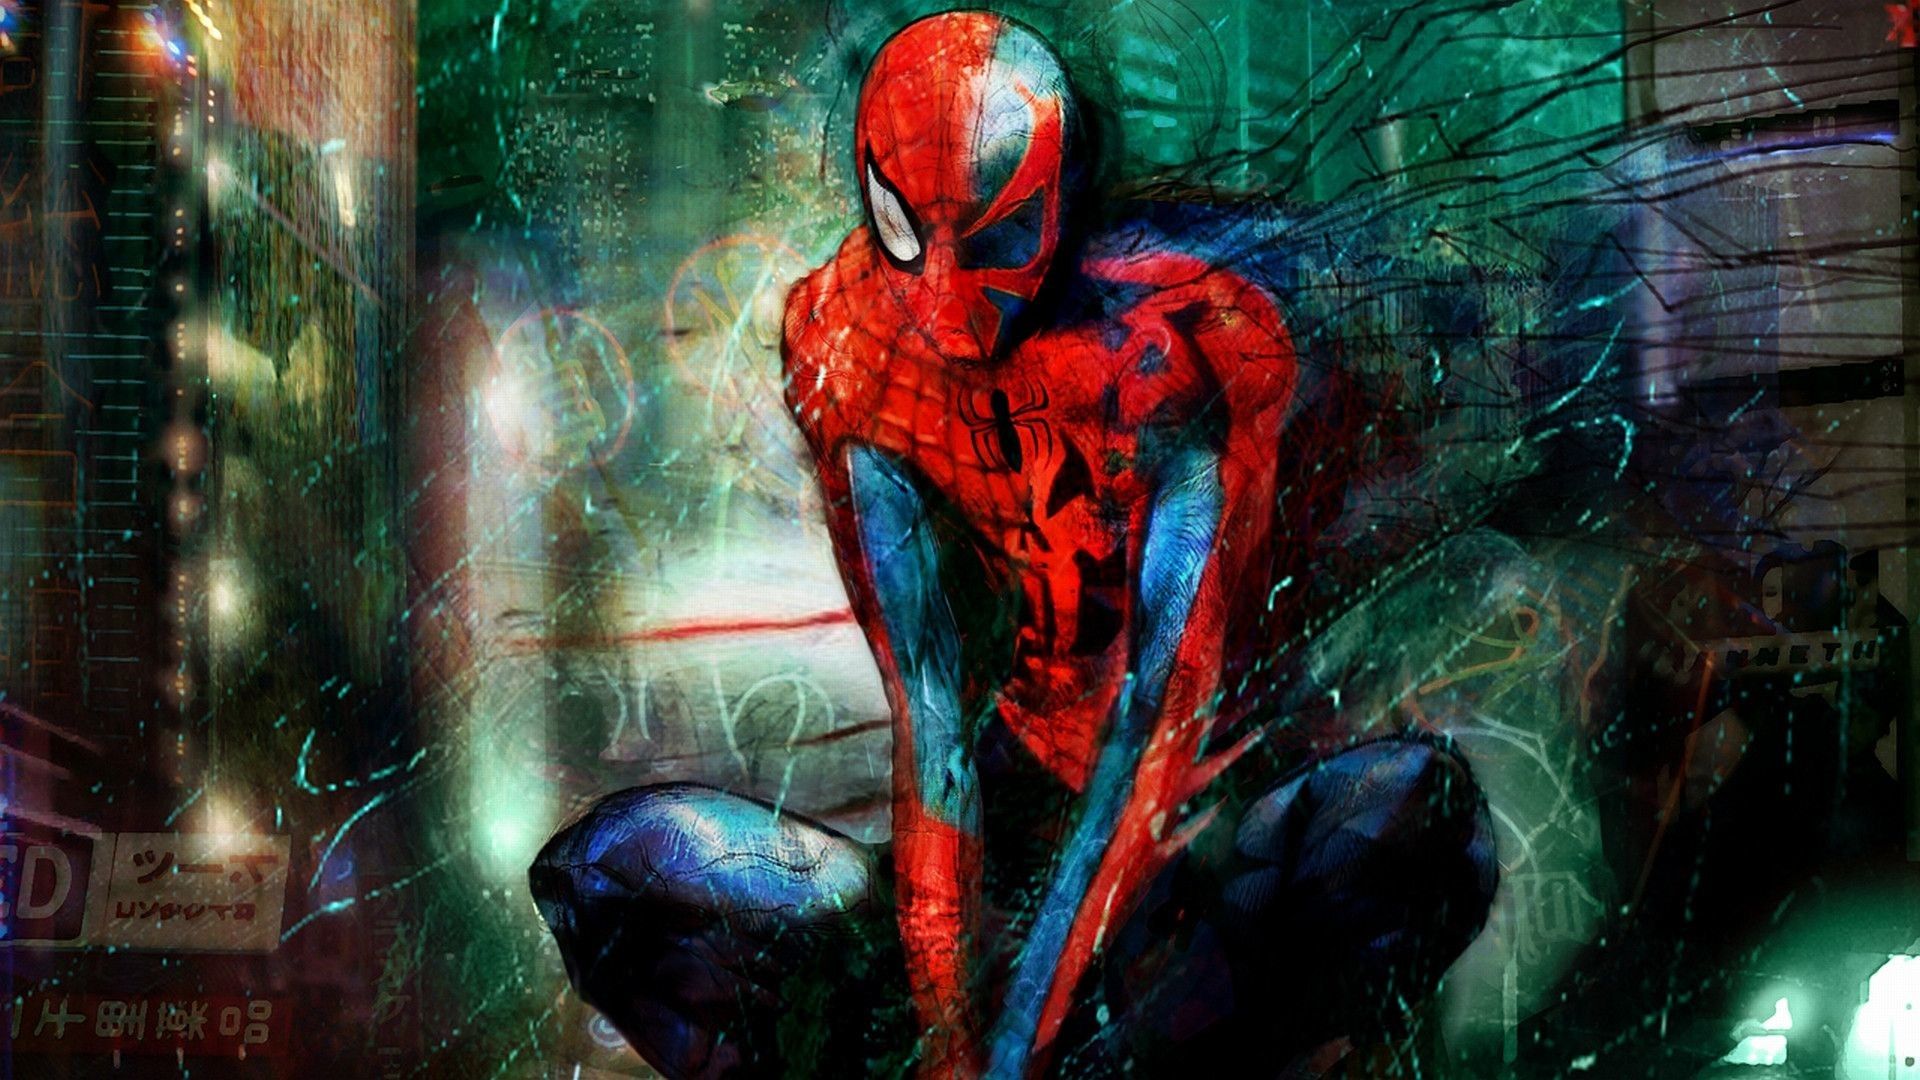 Spider Man 2099 Wallpaper background picture